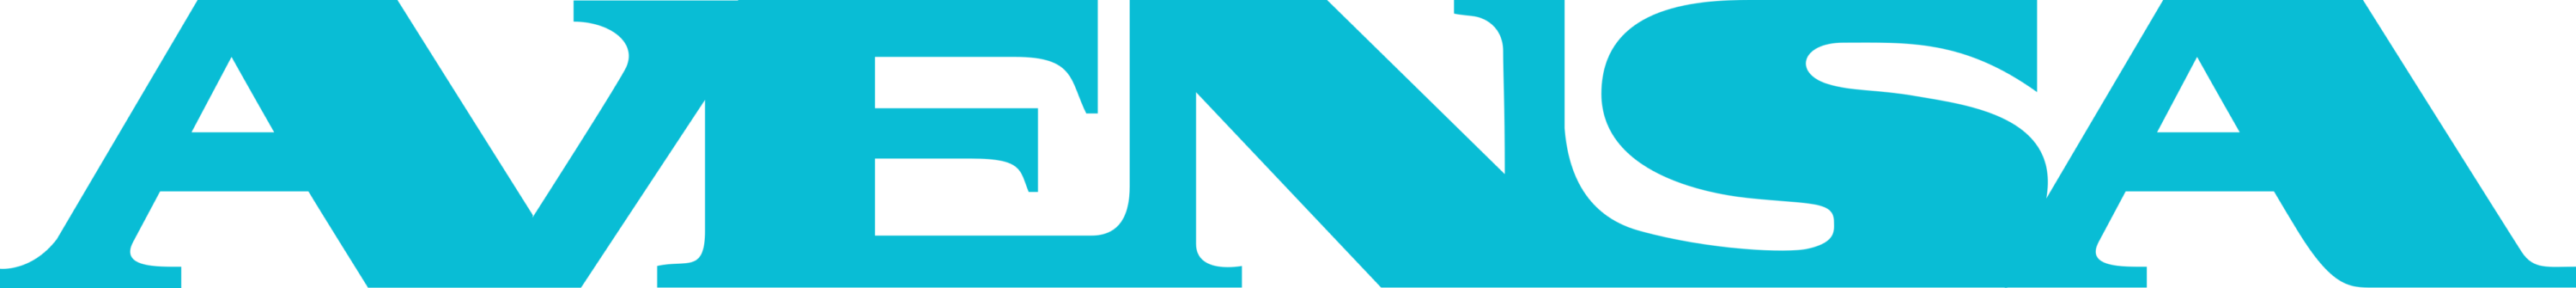 Avensa Logo